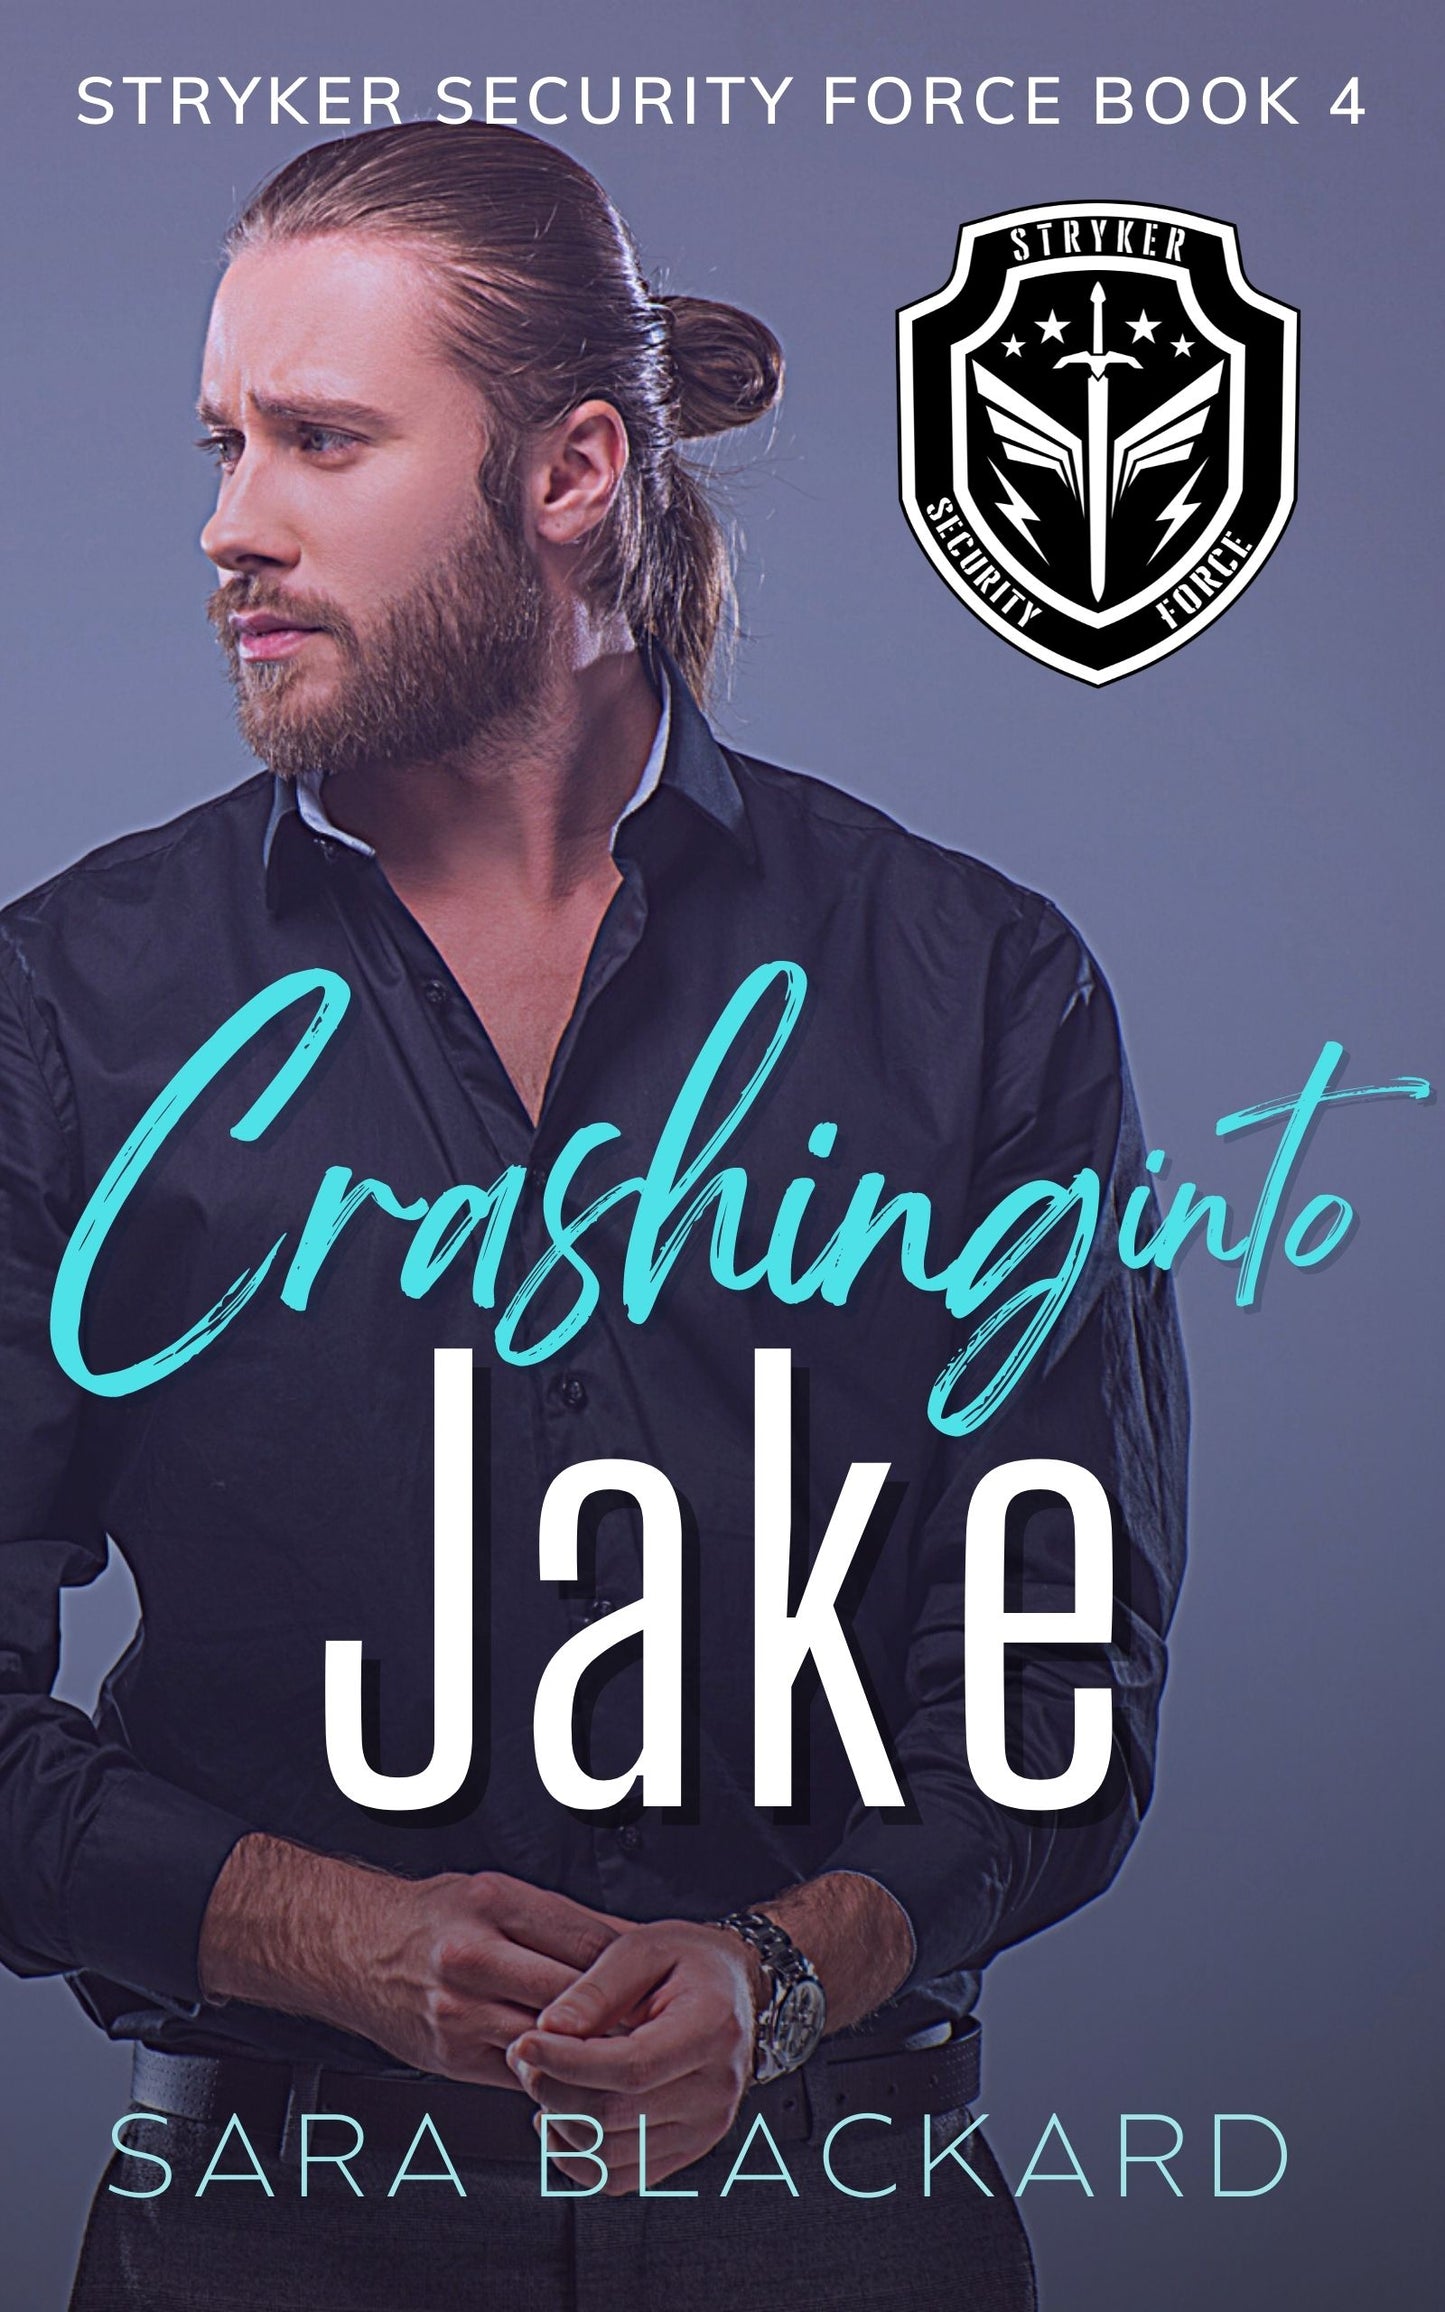 Crashing into Jake - Audiobook